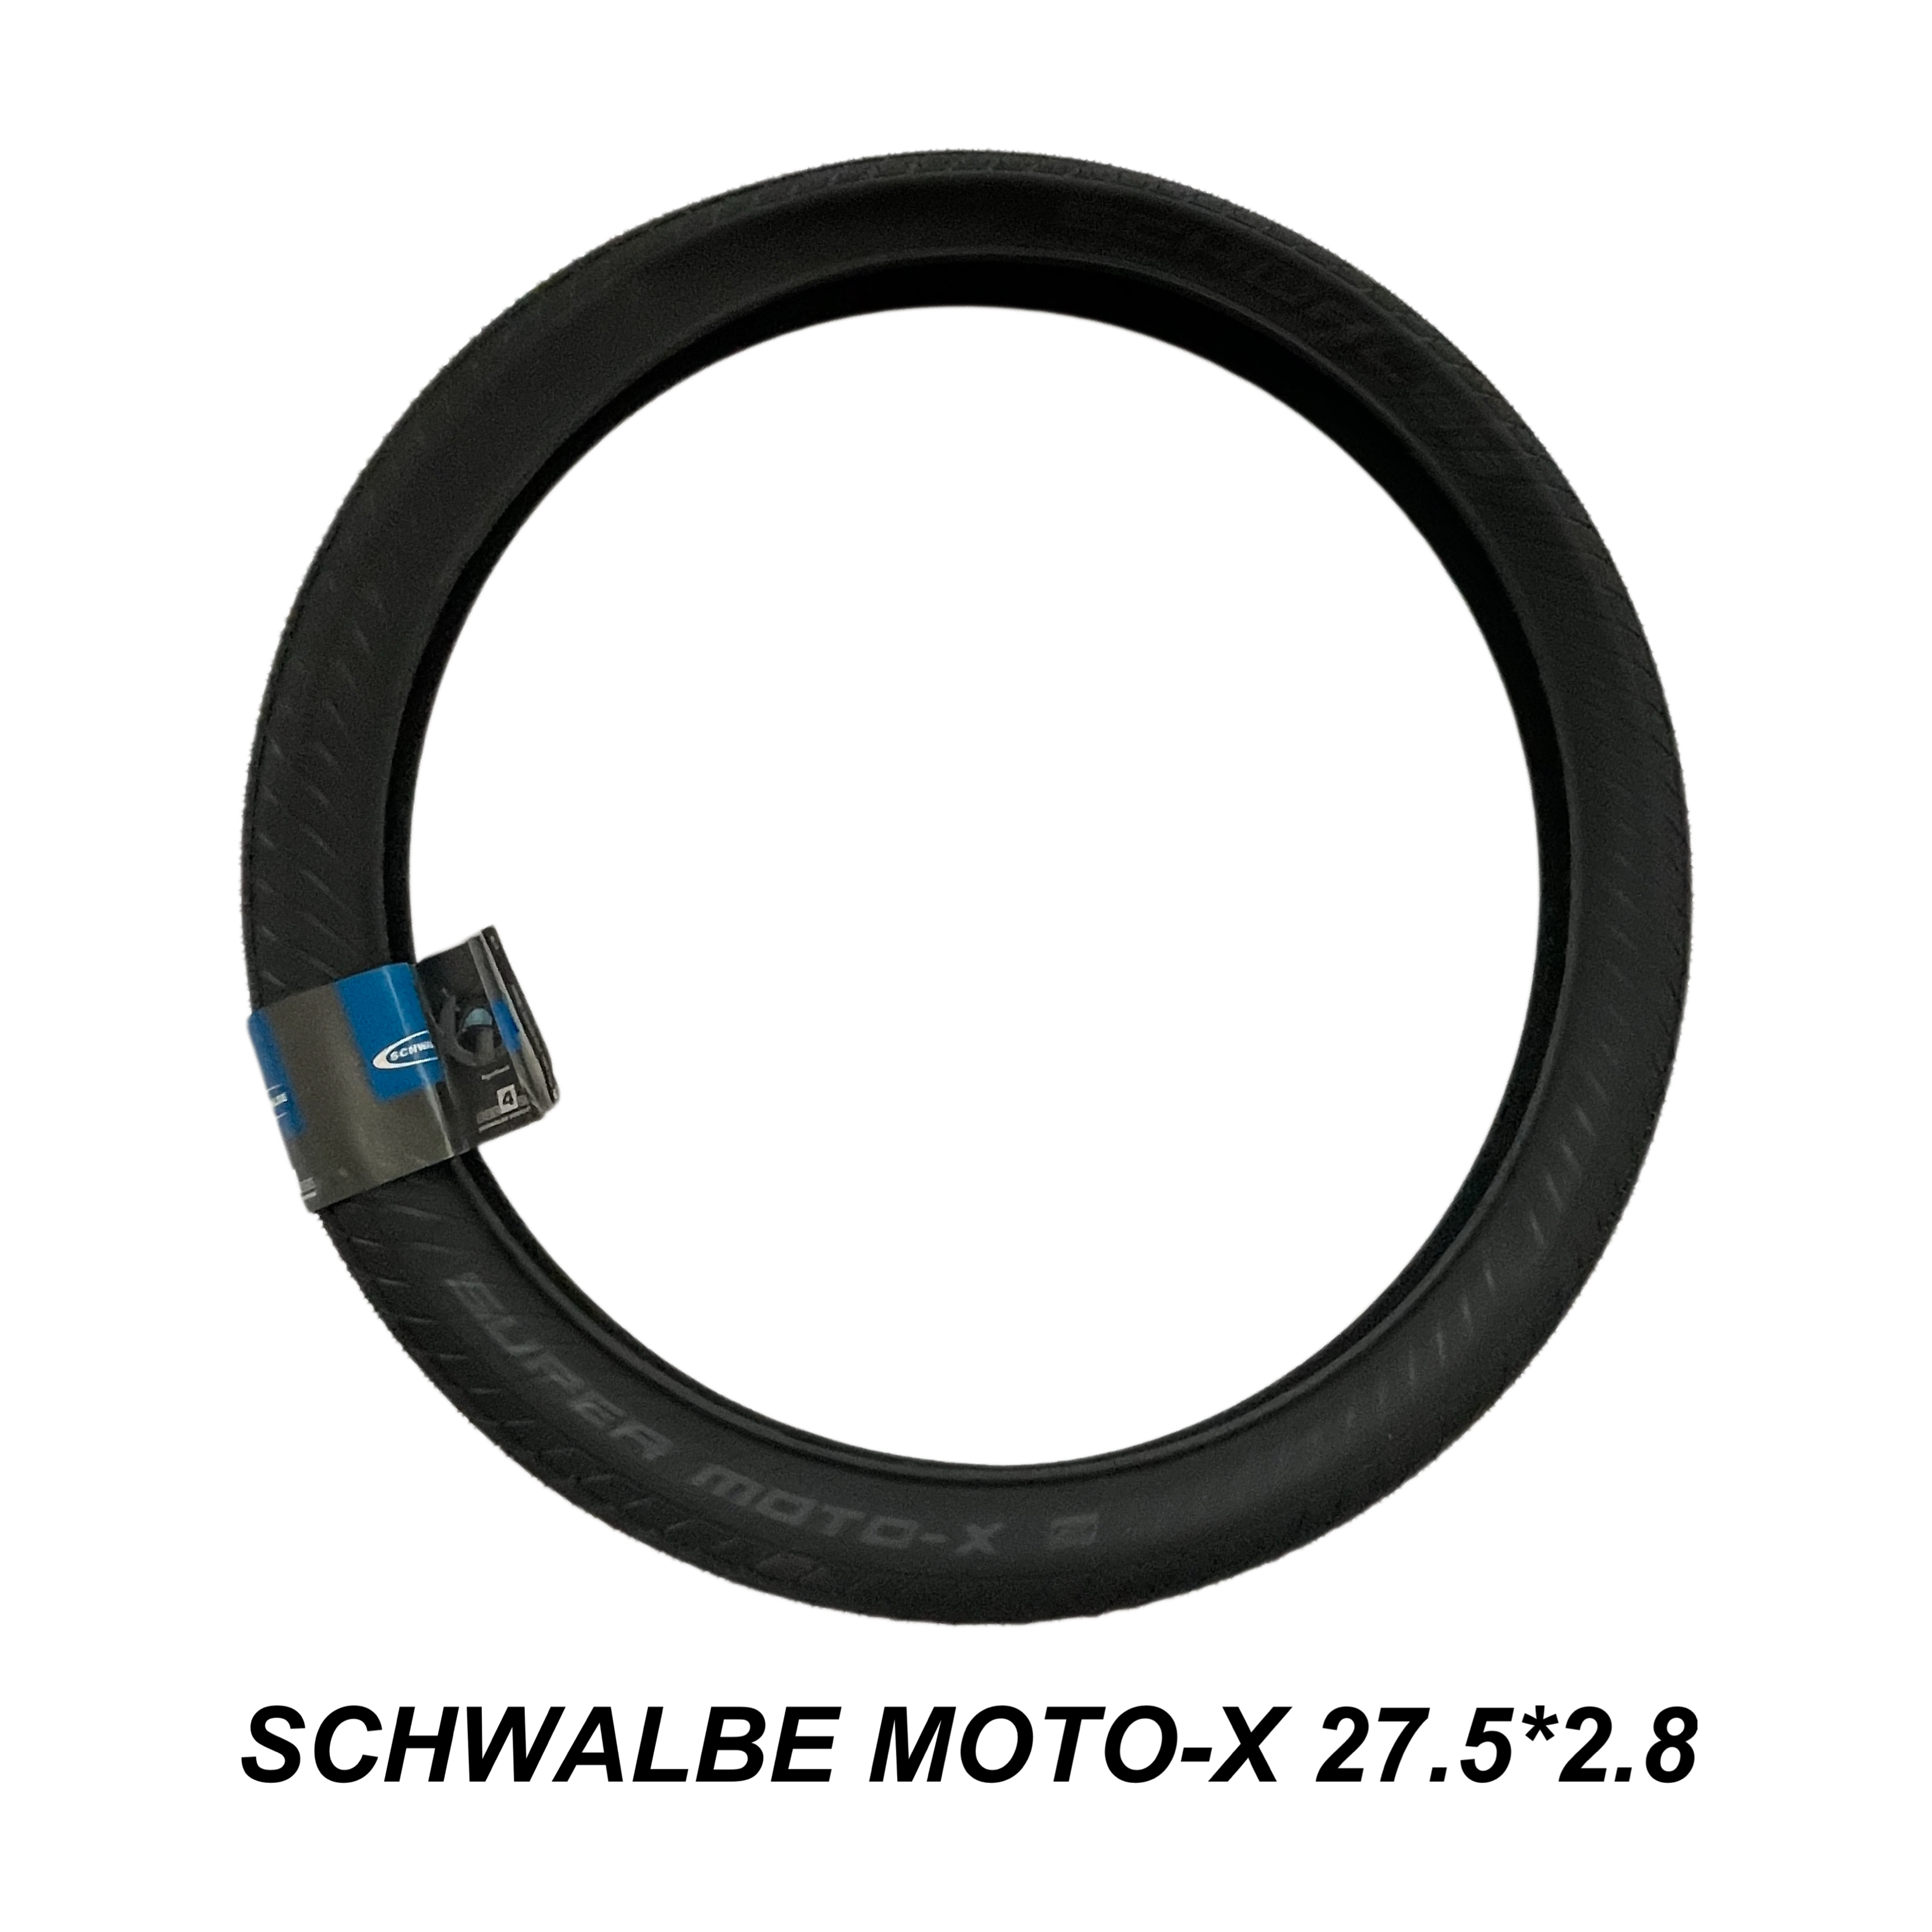 Tires :SCHWALBE SUPER MOTO-X 27.5x2.8